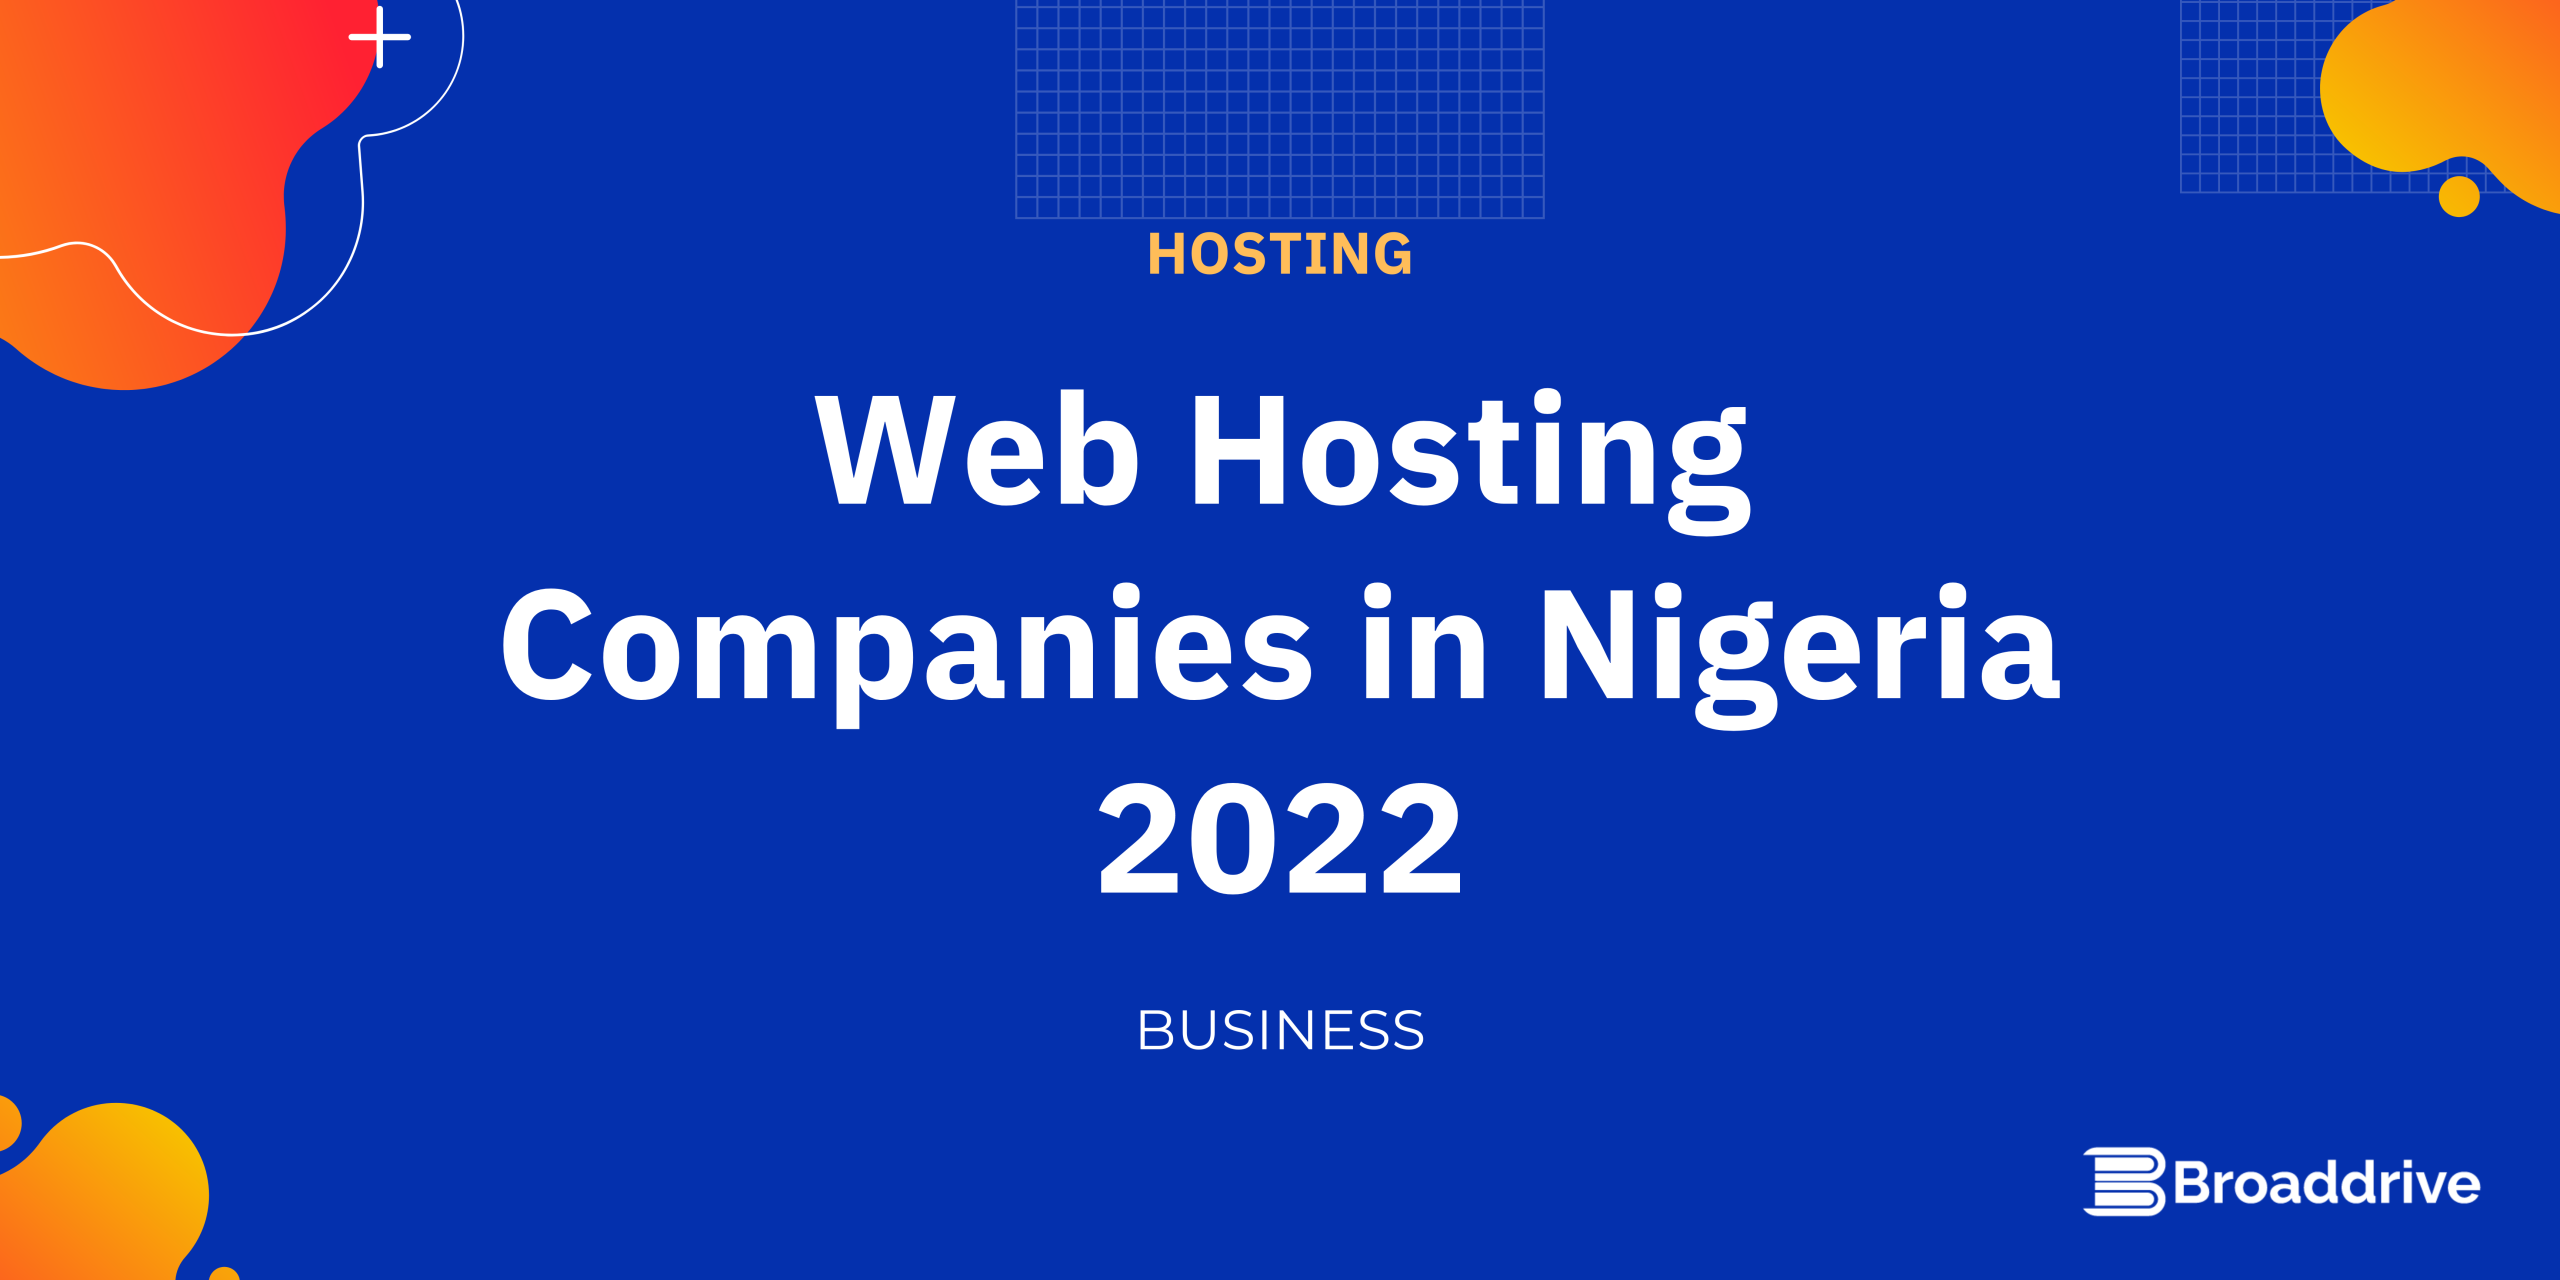 Web Hosting Companies in Nigeria 2022